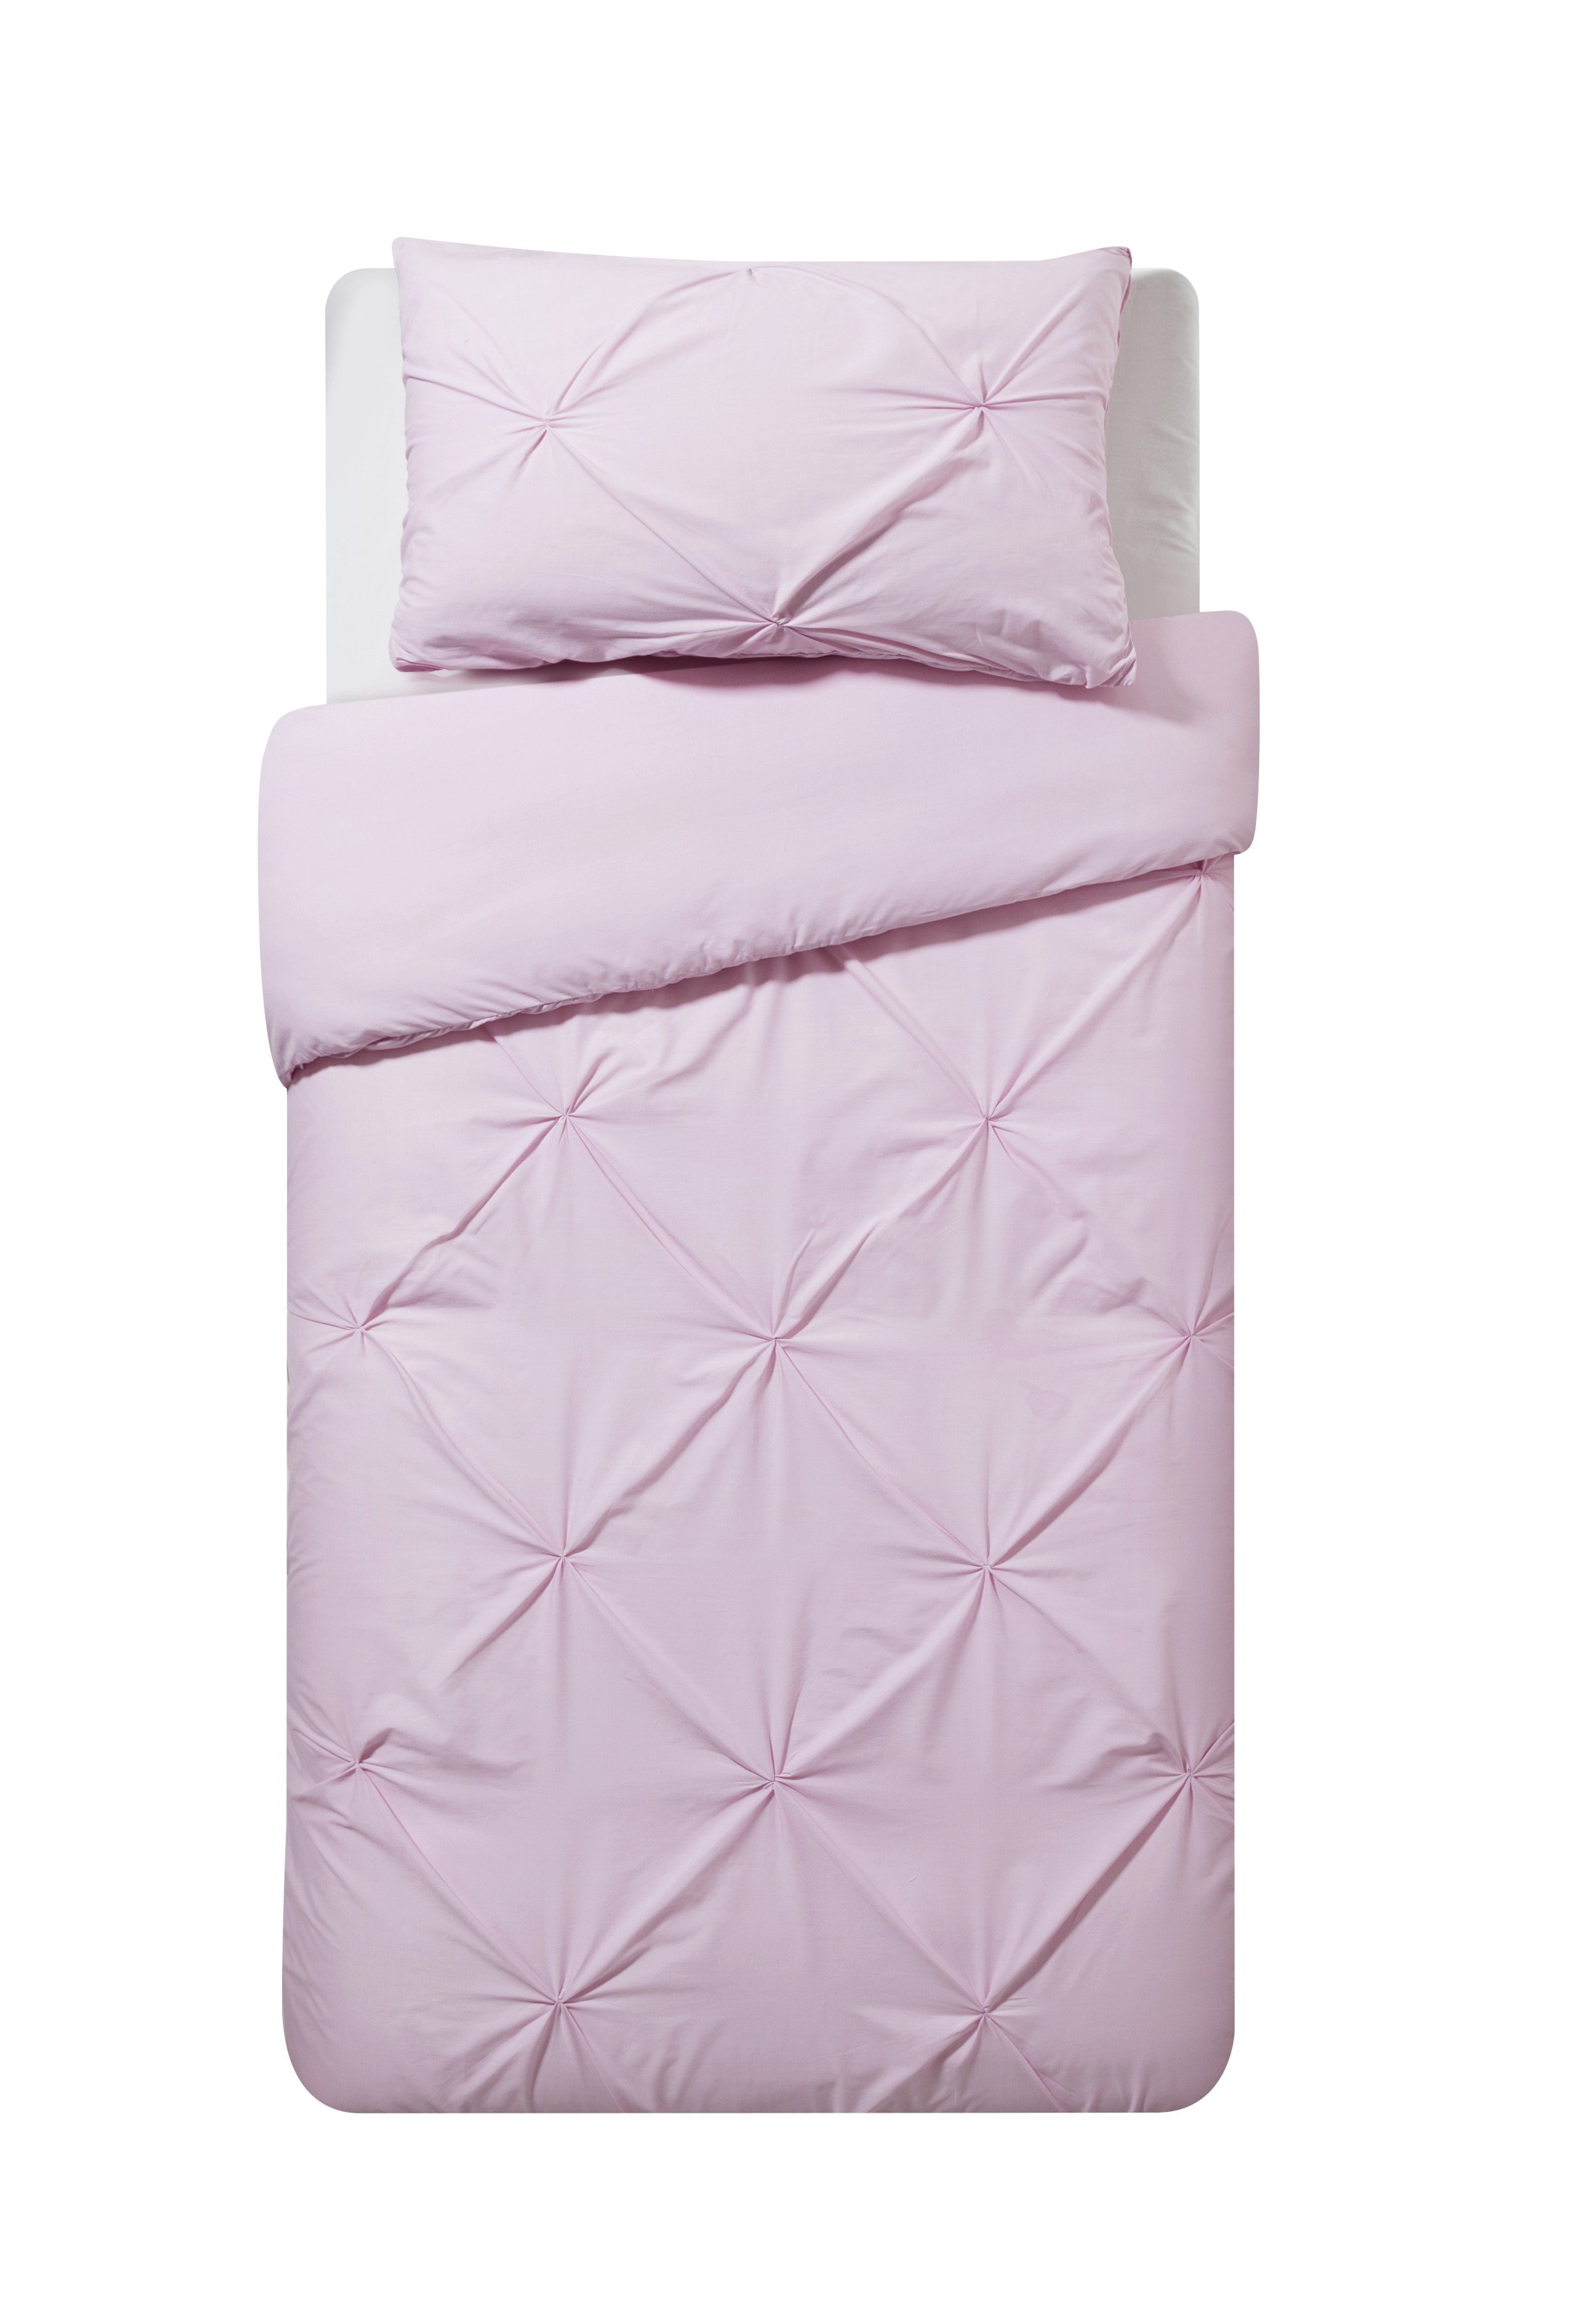 Argos Home Pink Pintuck Bedding Set - Single